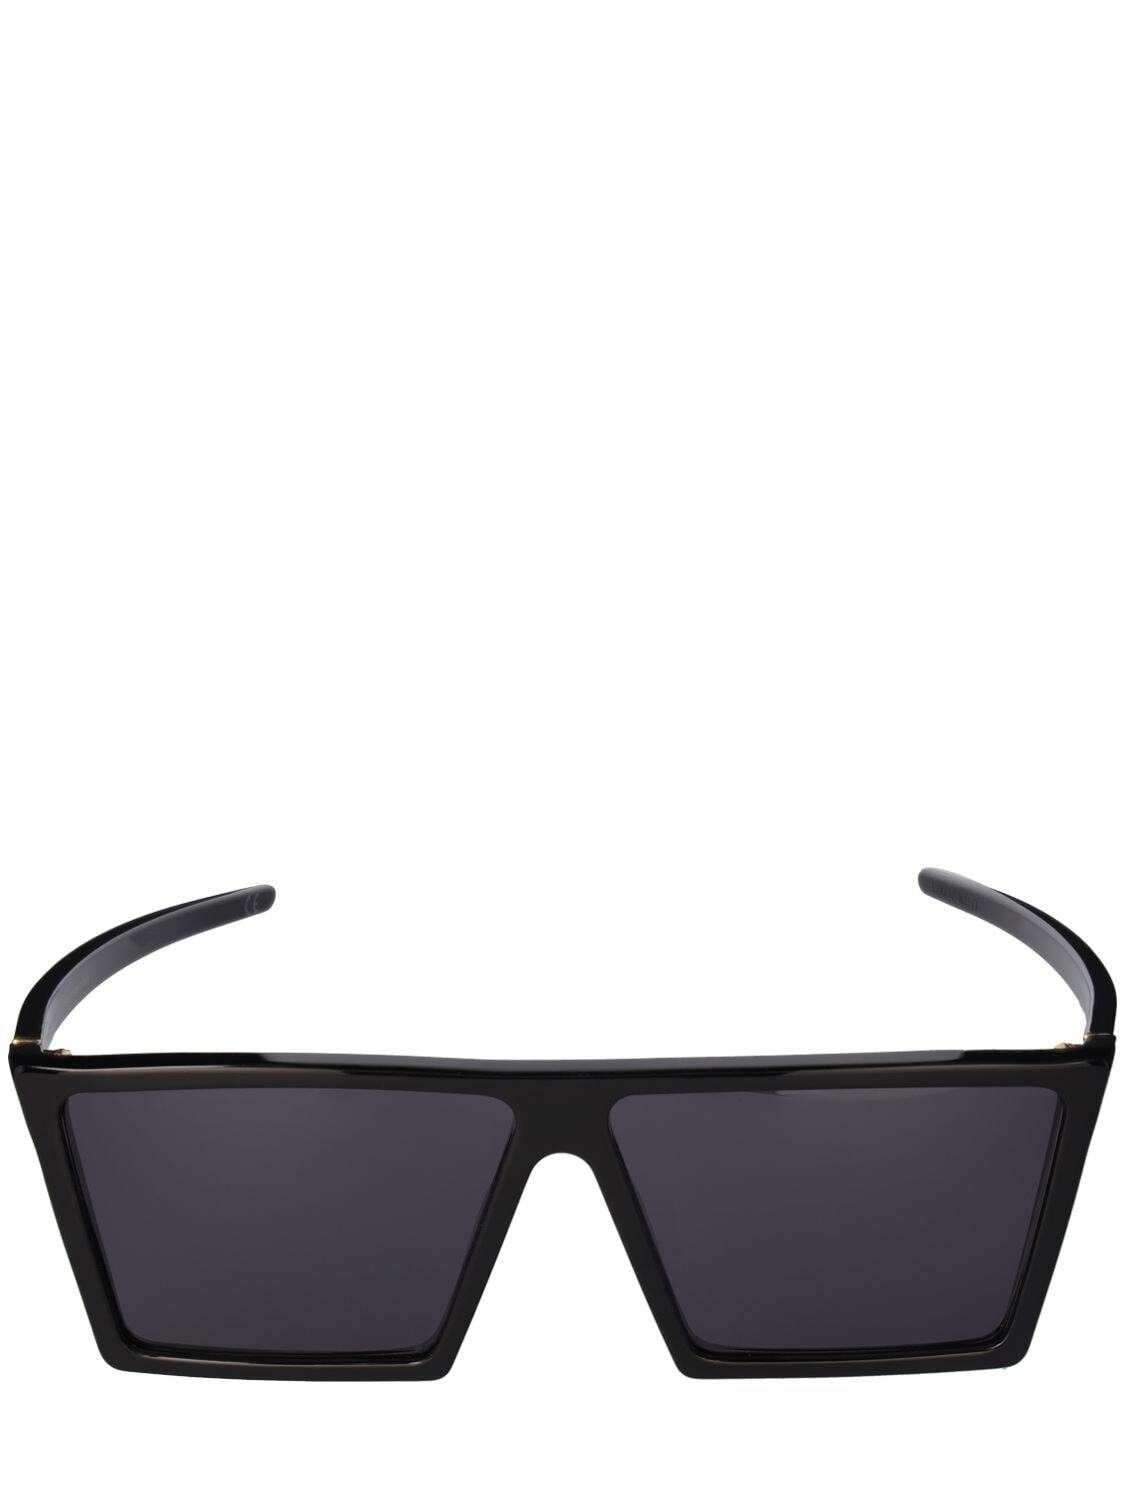 RETROSUPERFUTURE W Squared Acetate Sunglasses in black / grey